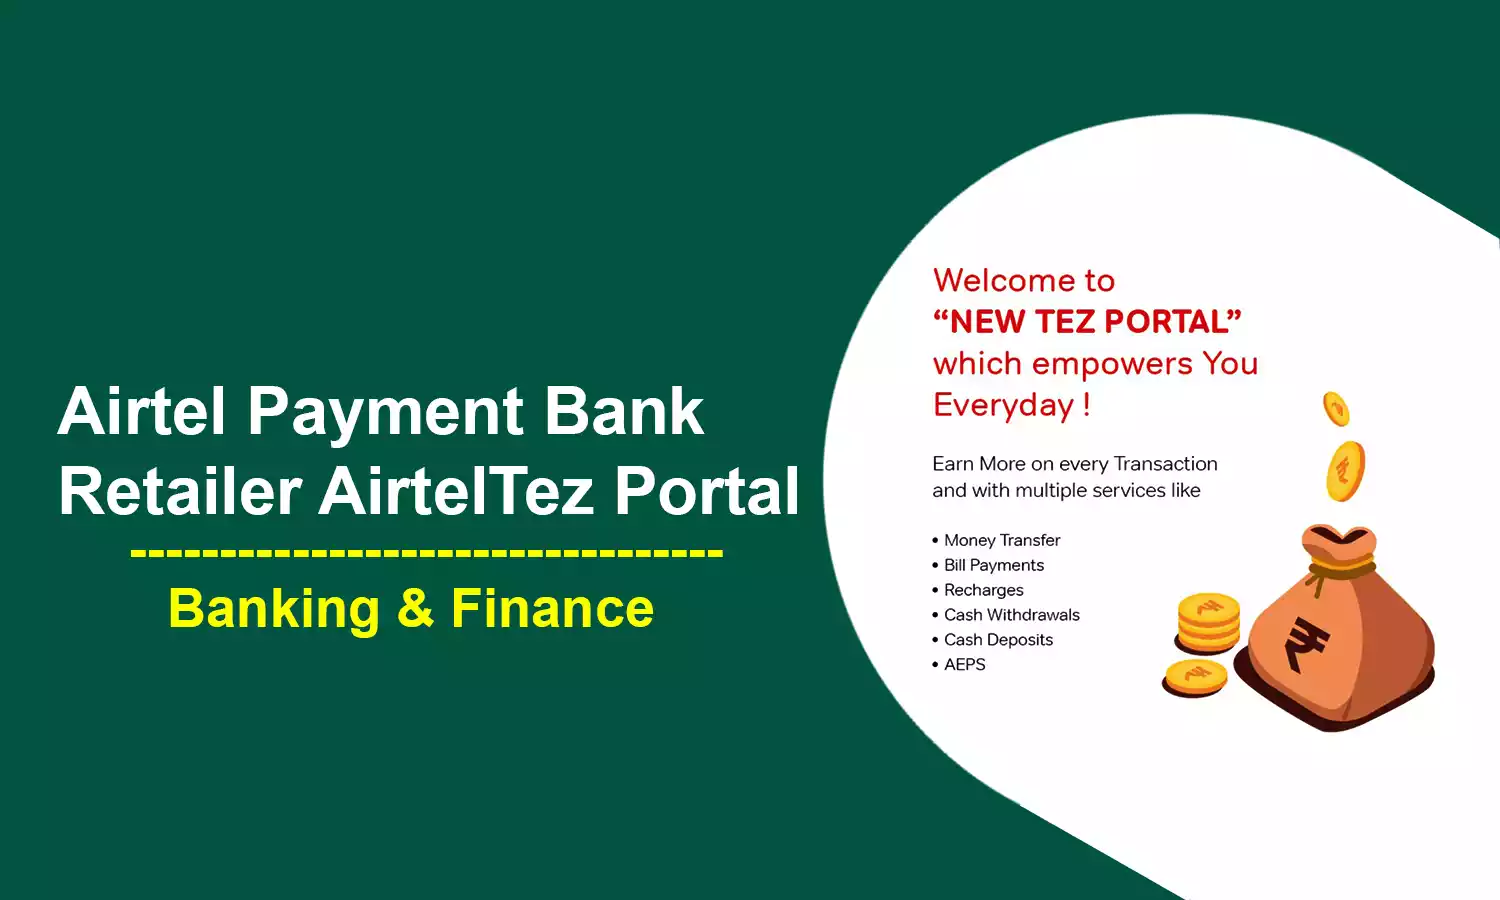 Airtel Payment Bank Retailer AirtelTez Portal